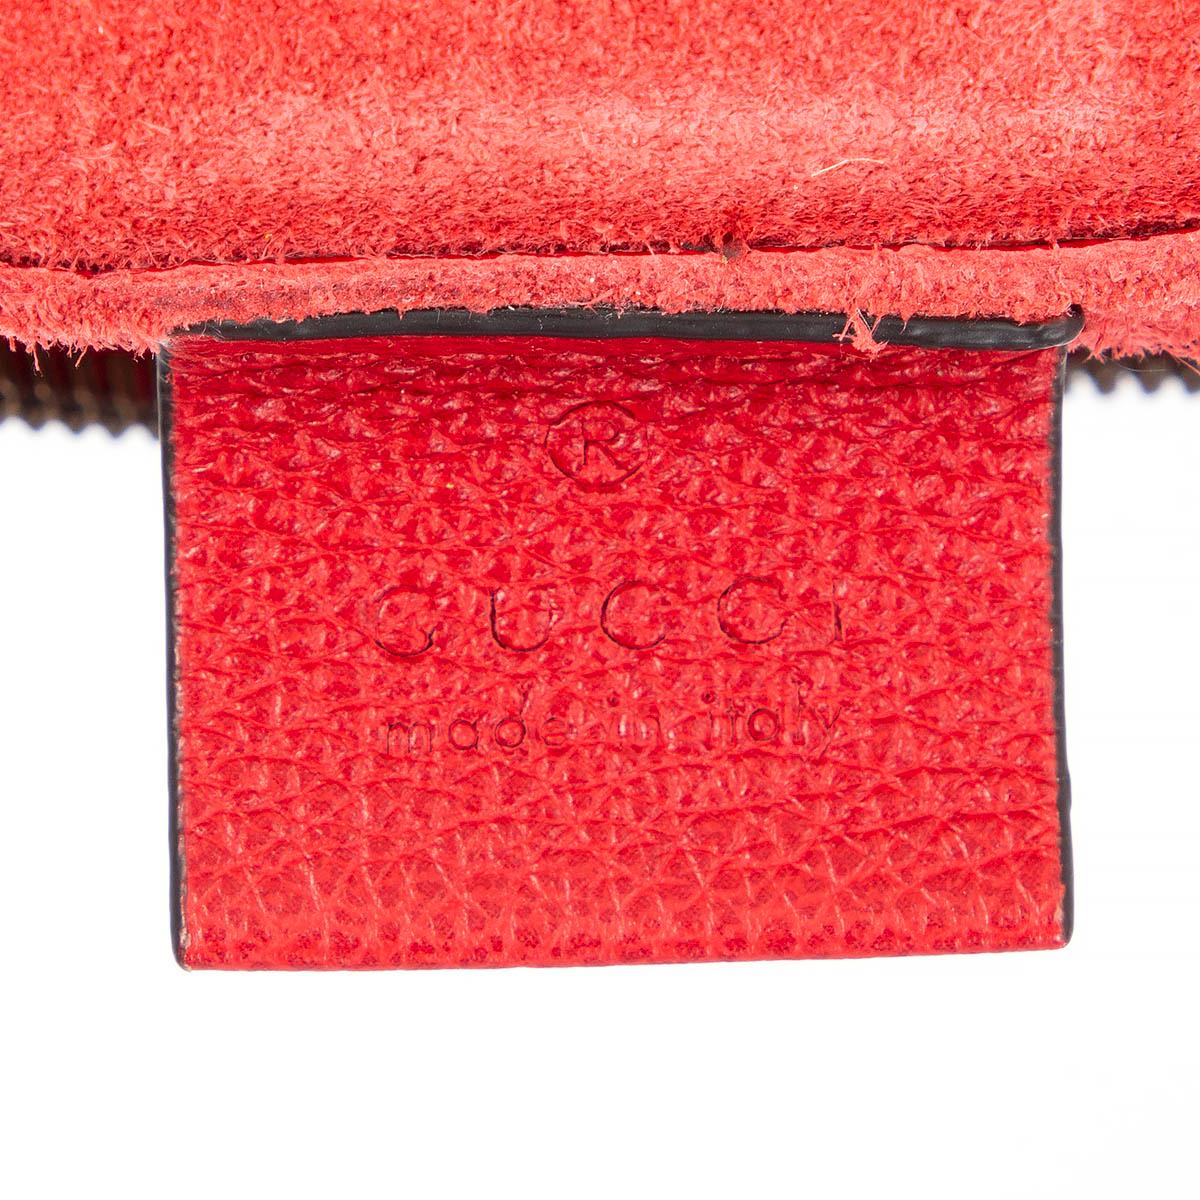 GUCCI red leather 2018 LOGO SMALL PORTFOLIO Pouch Bag 1